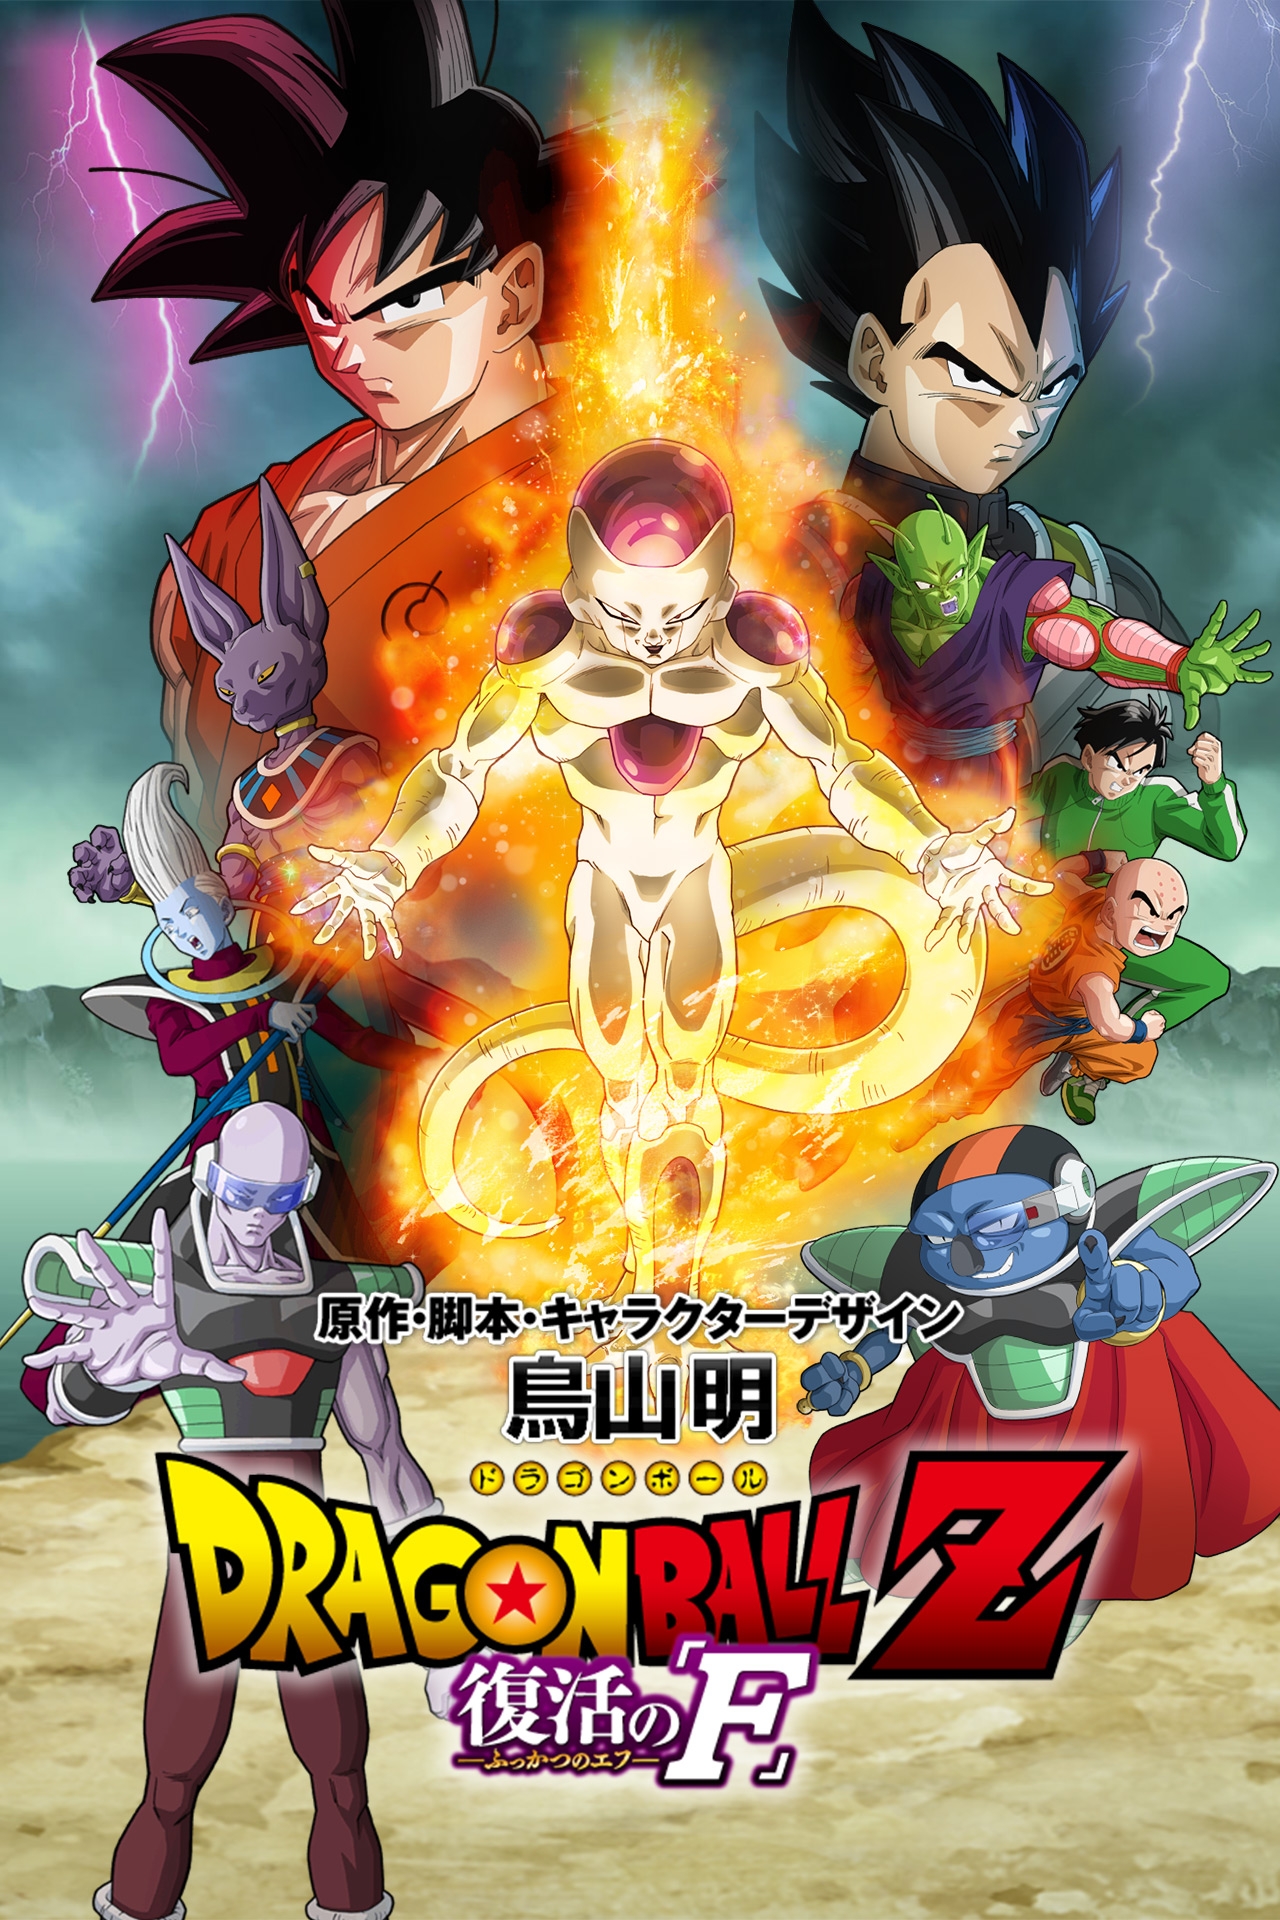 Watch Dragon Ball Z Resurrection Of F